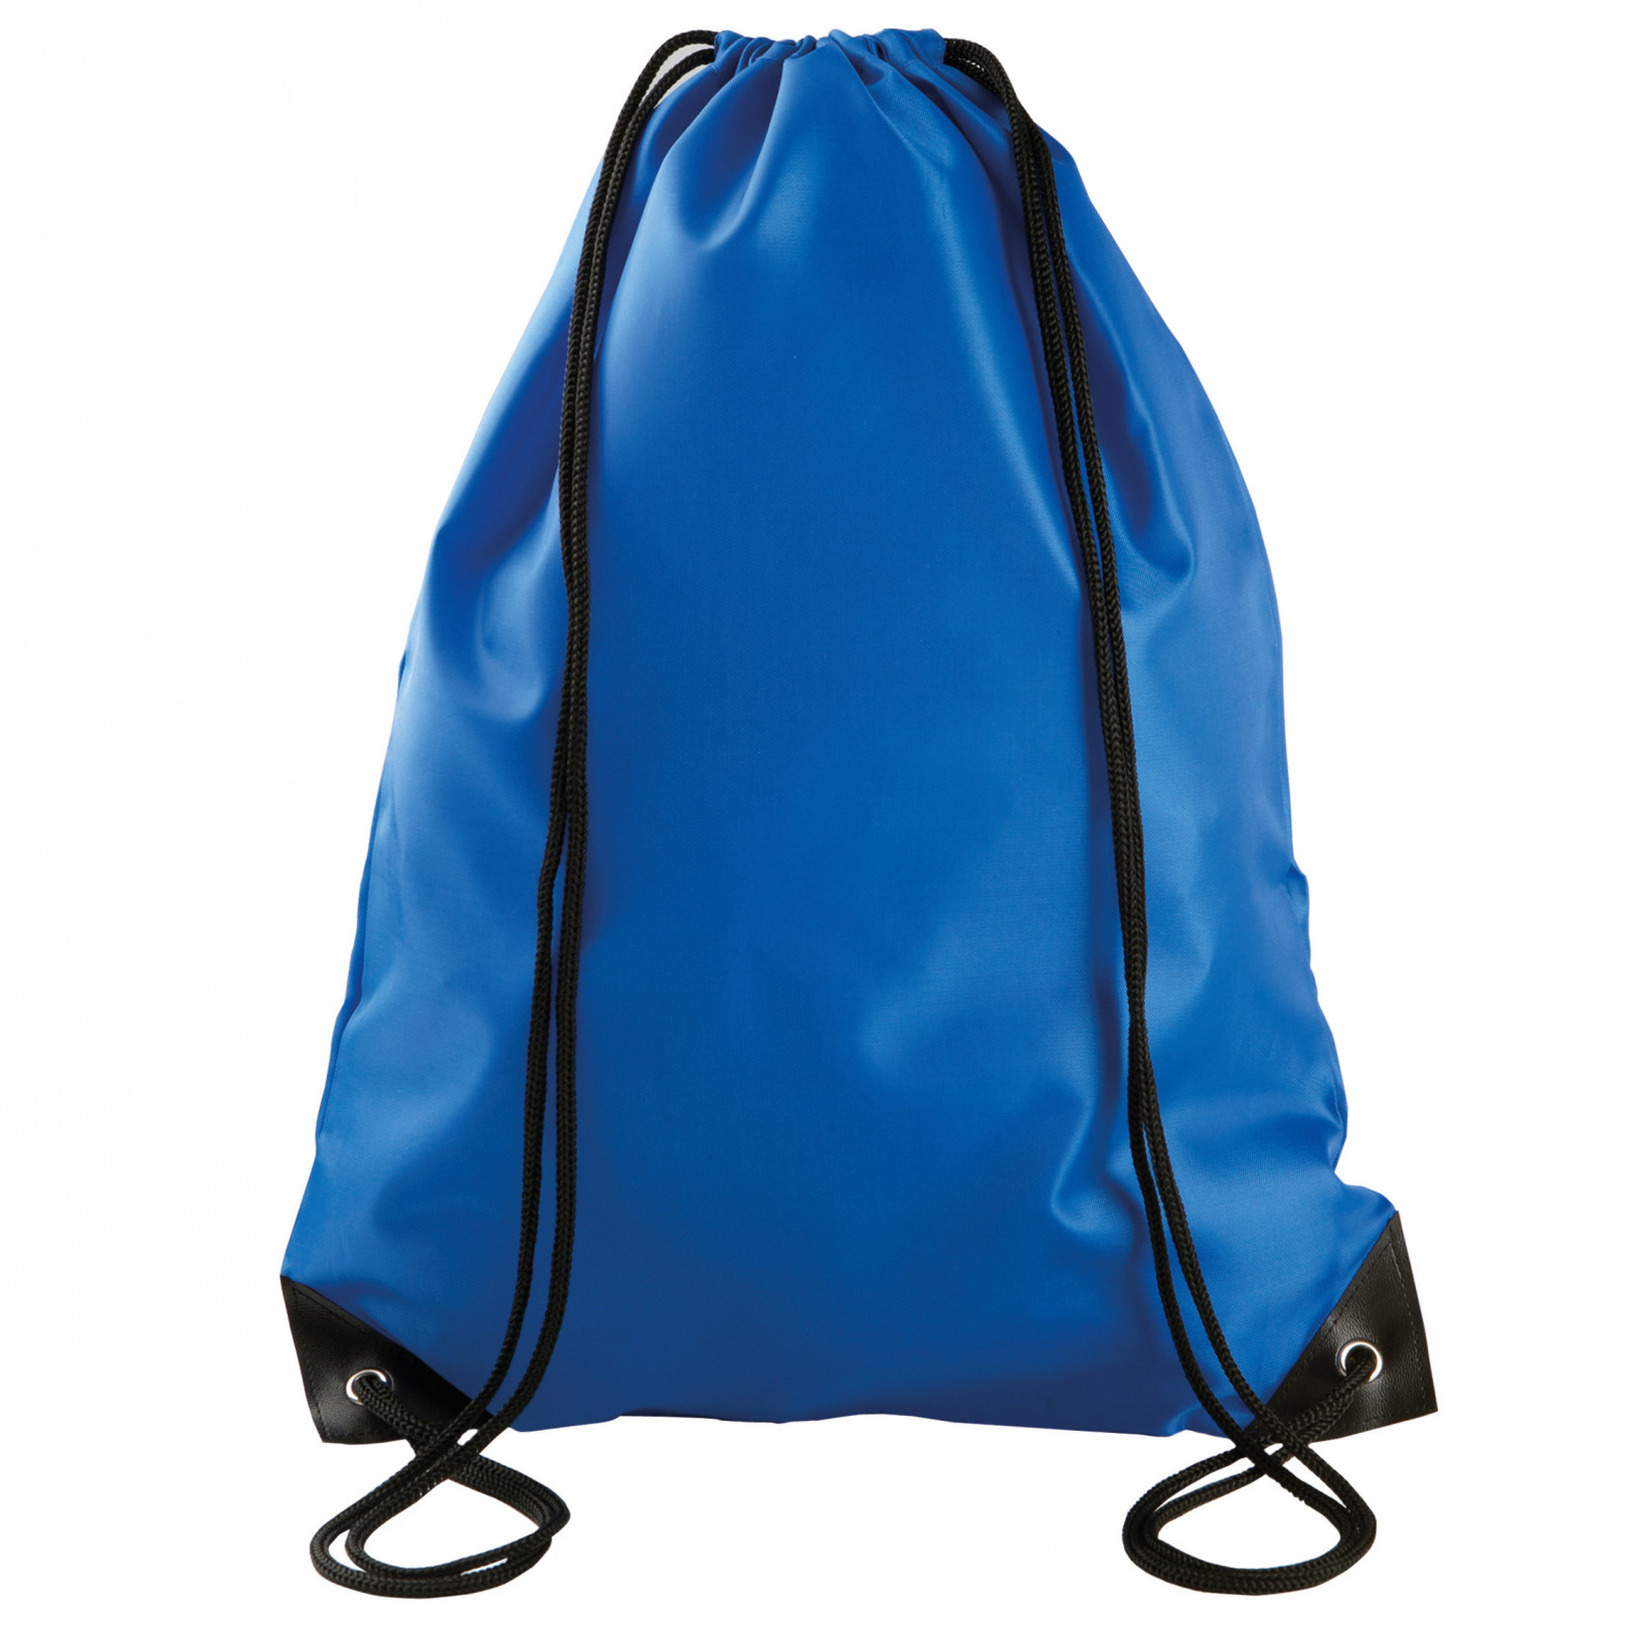 Sport gymtas-draagtas kobalt blauw met rijgkoord 34 x 44 cm van polyester